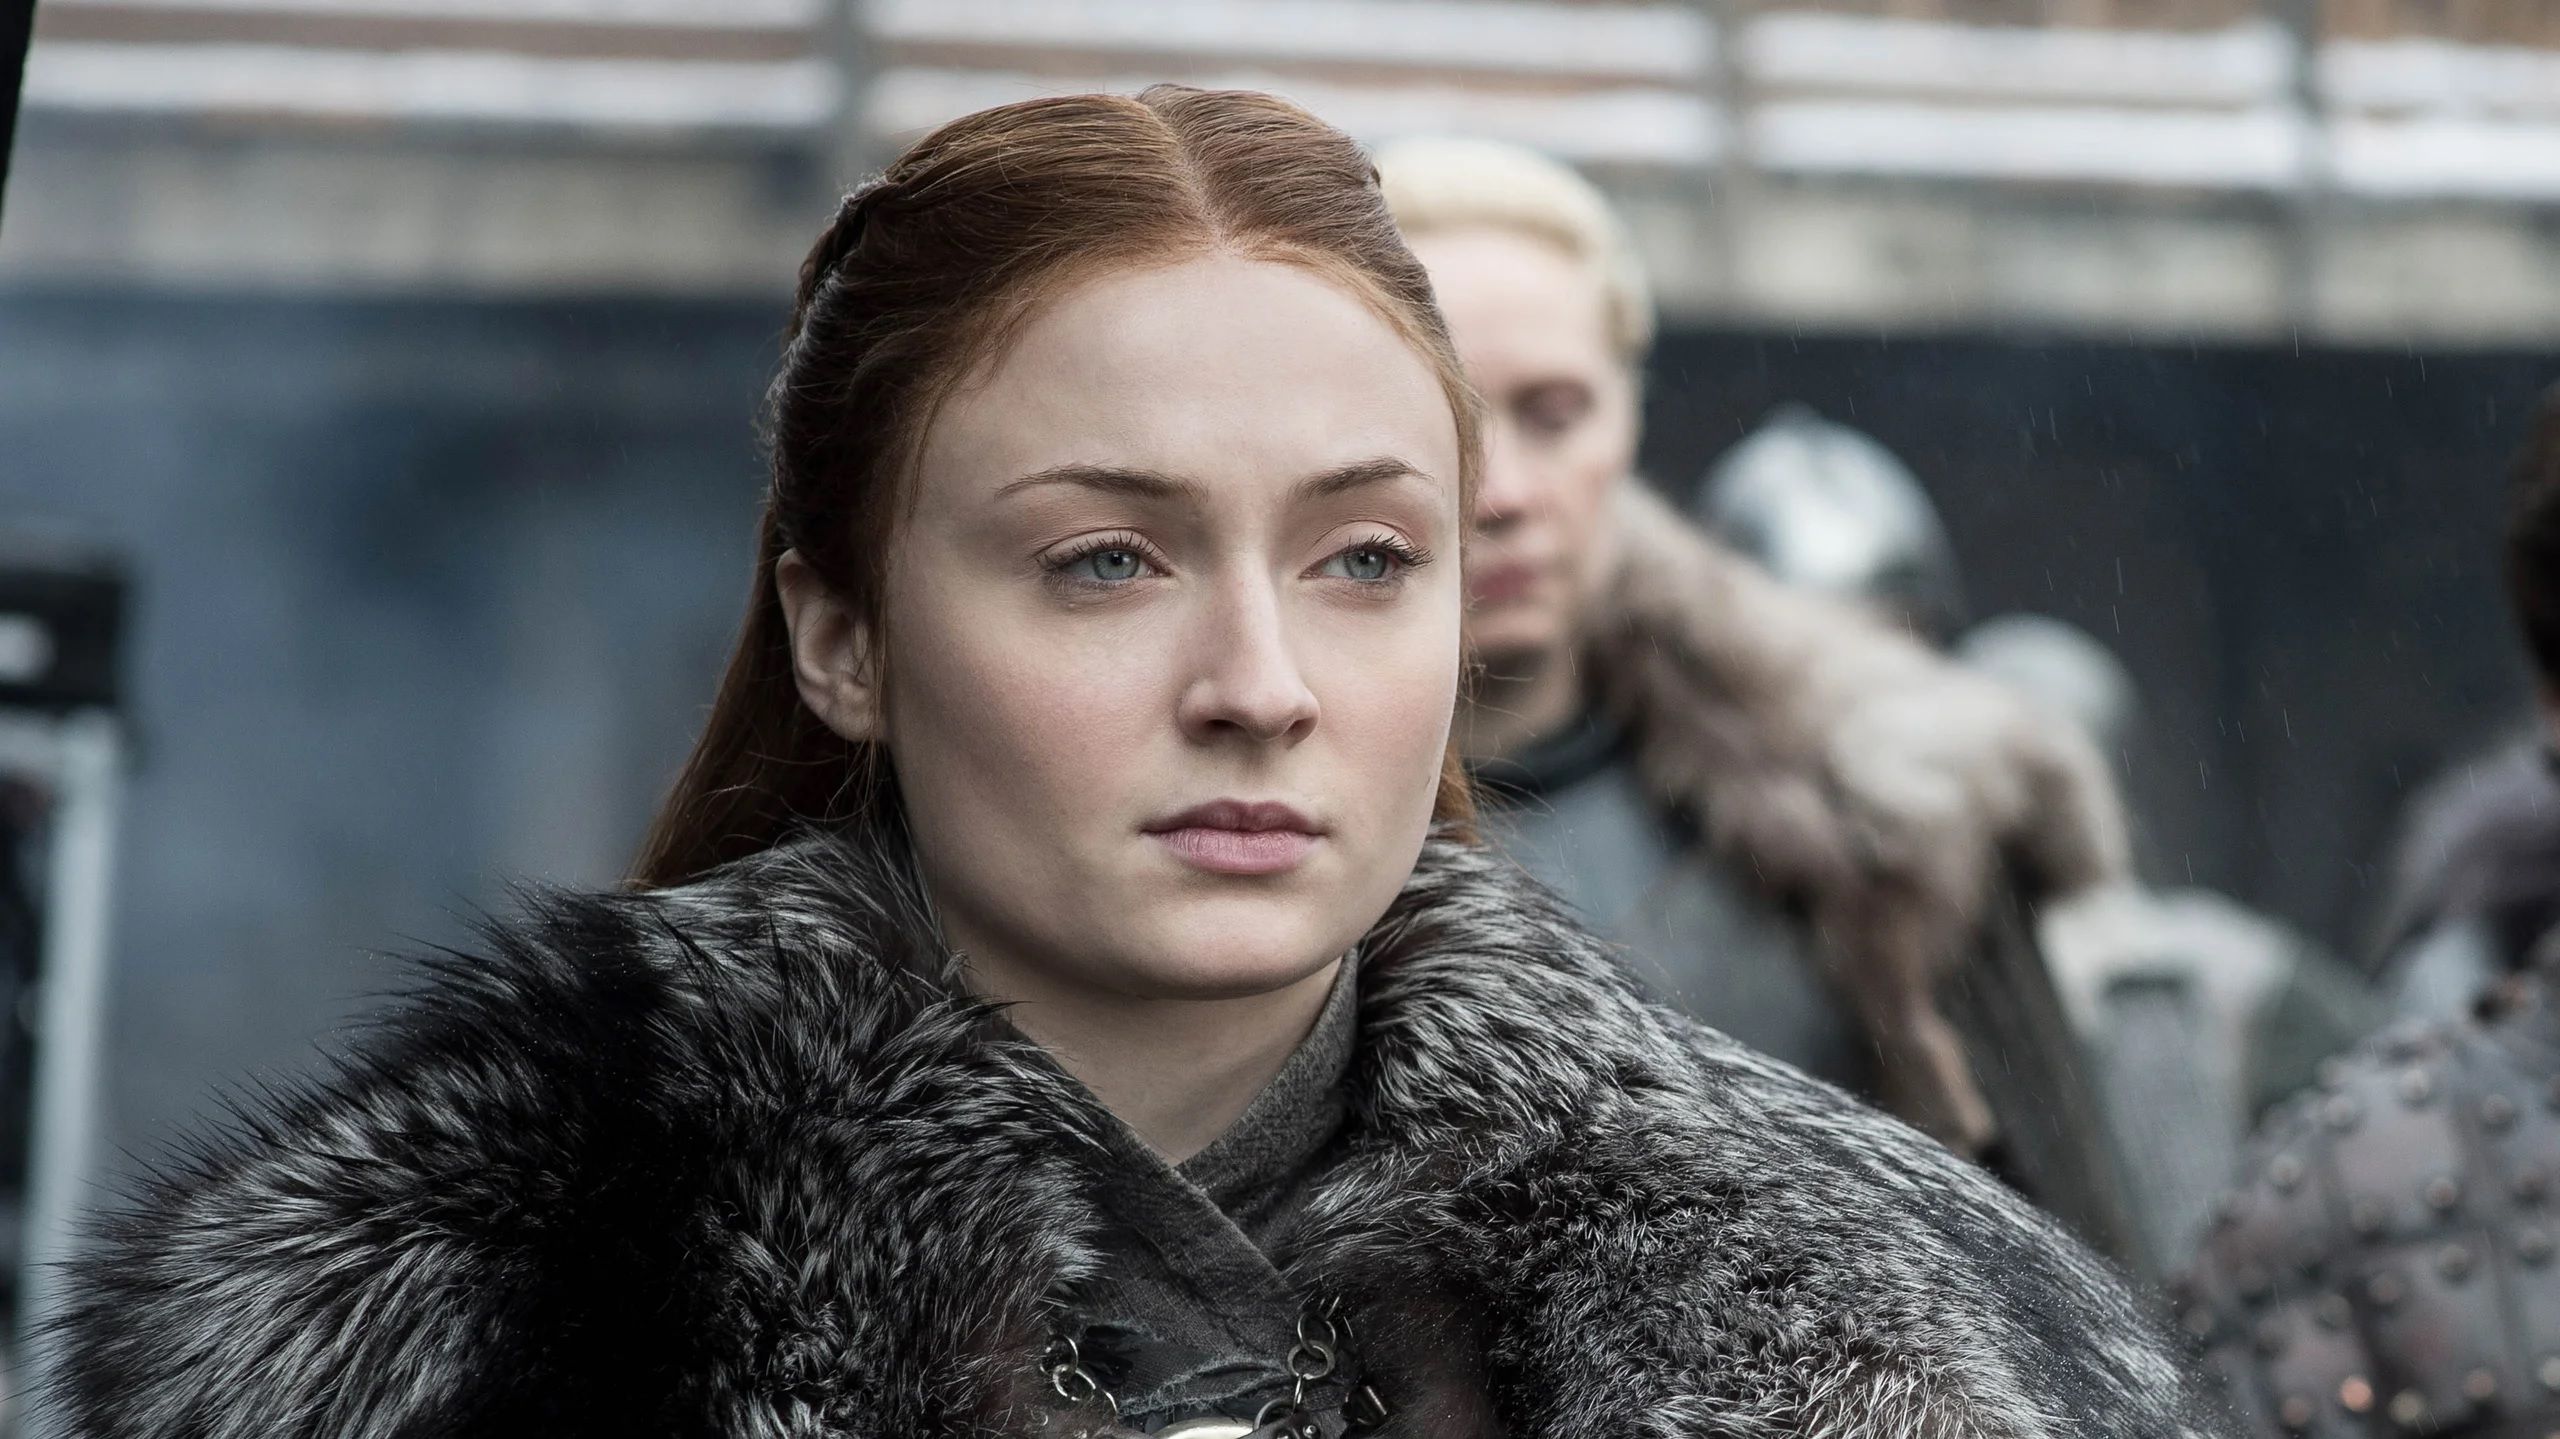 Sophie Turner as she appears in season 7 of Game of Thrones as Sansa Stark.